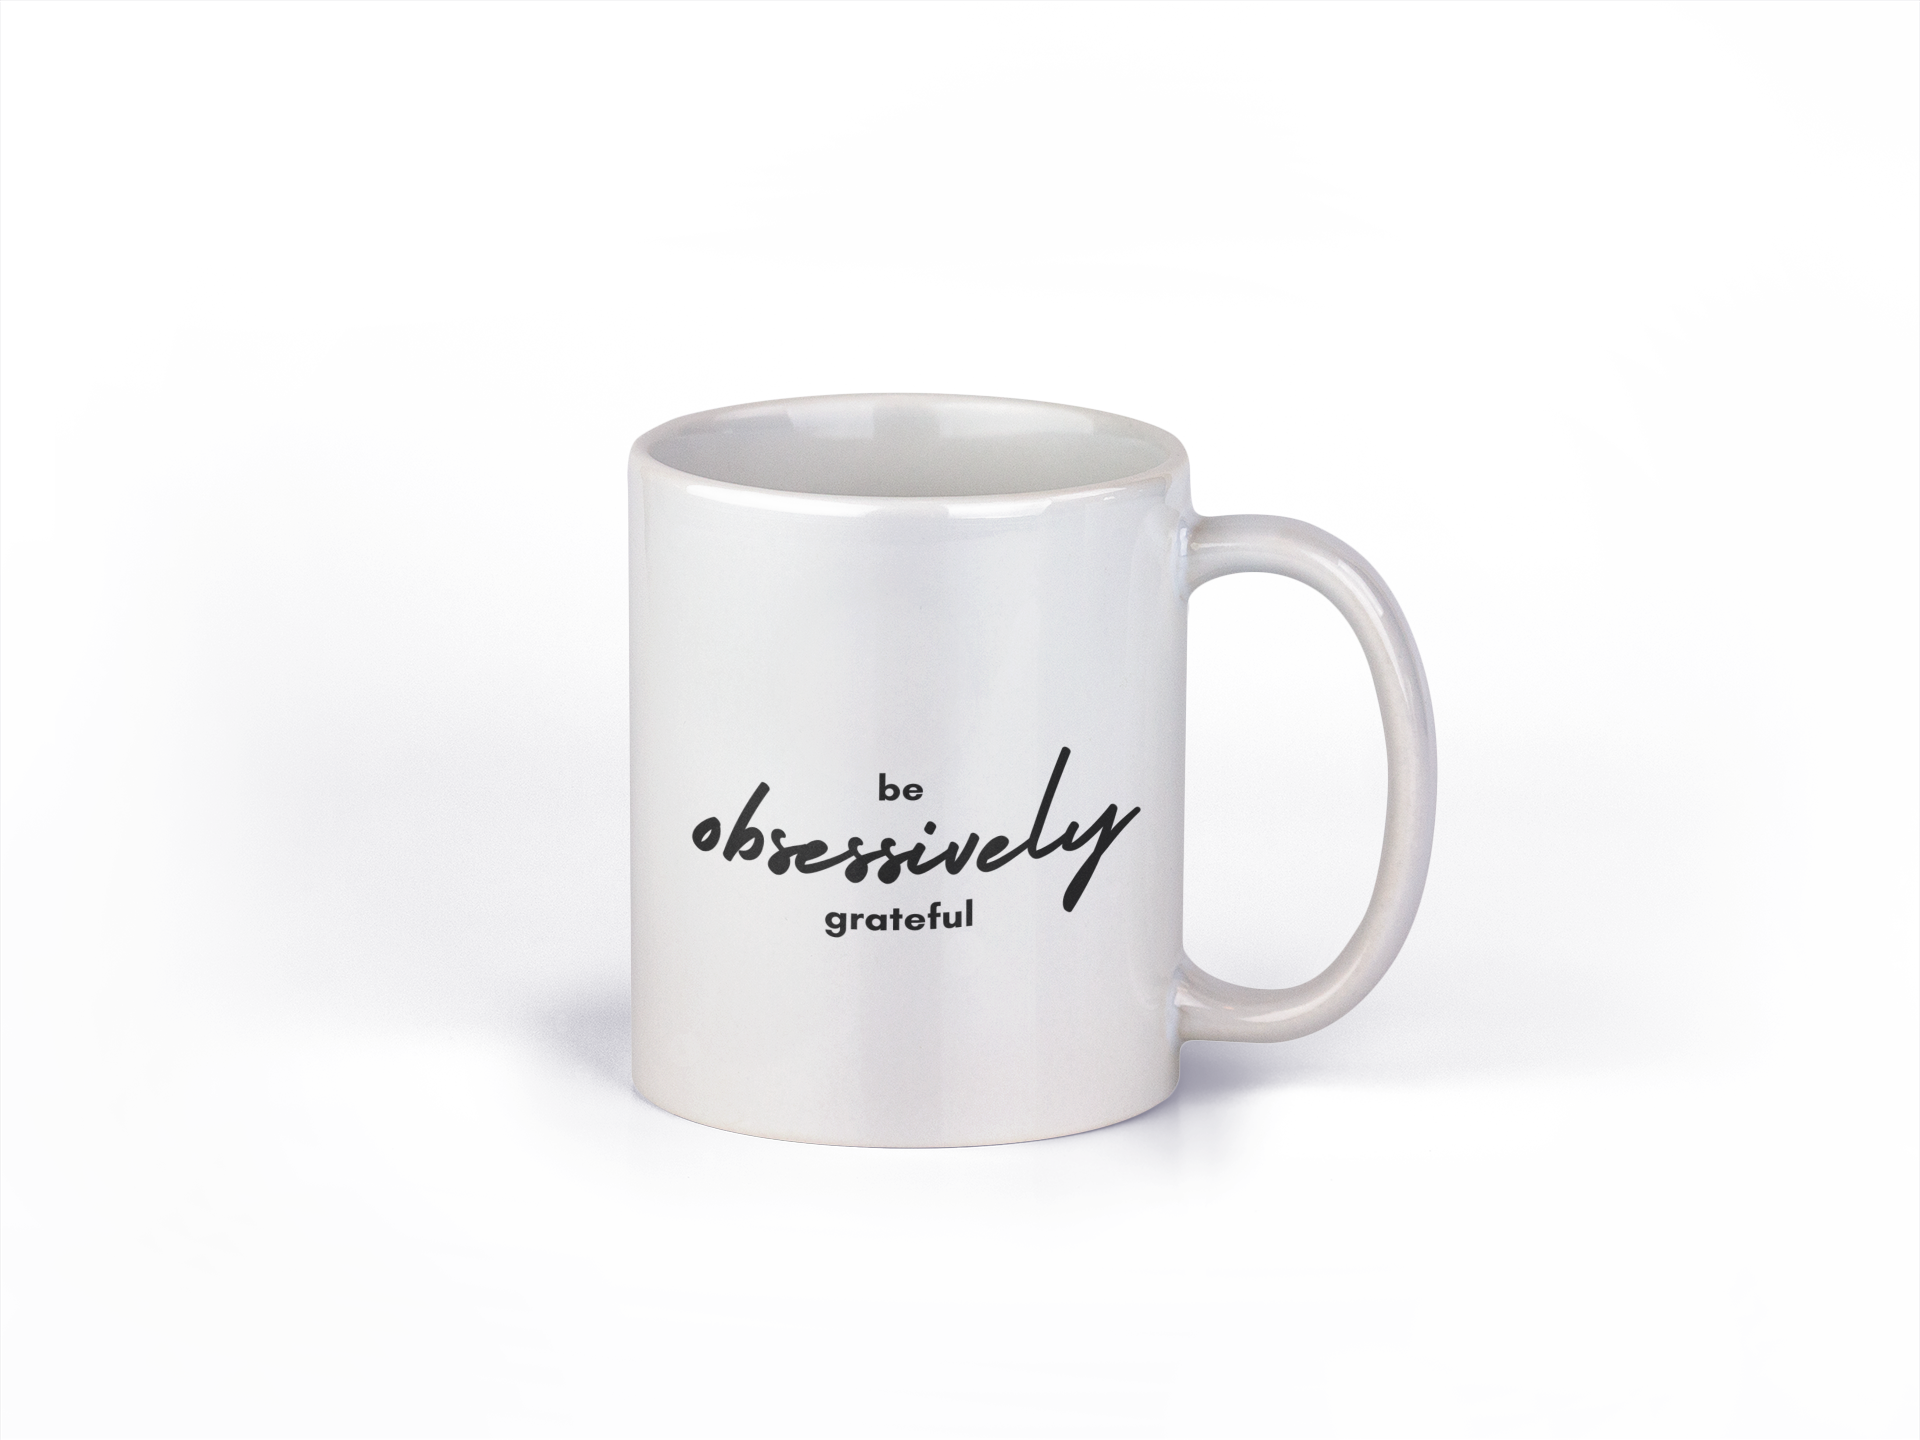 Be Obsessively Grateful - Coffee Mug